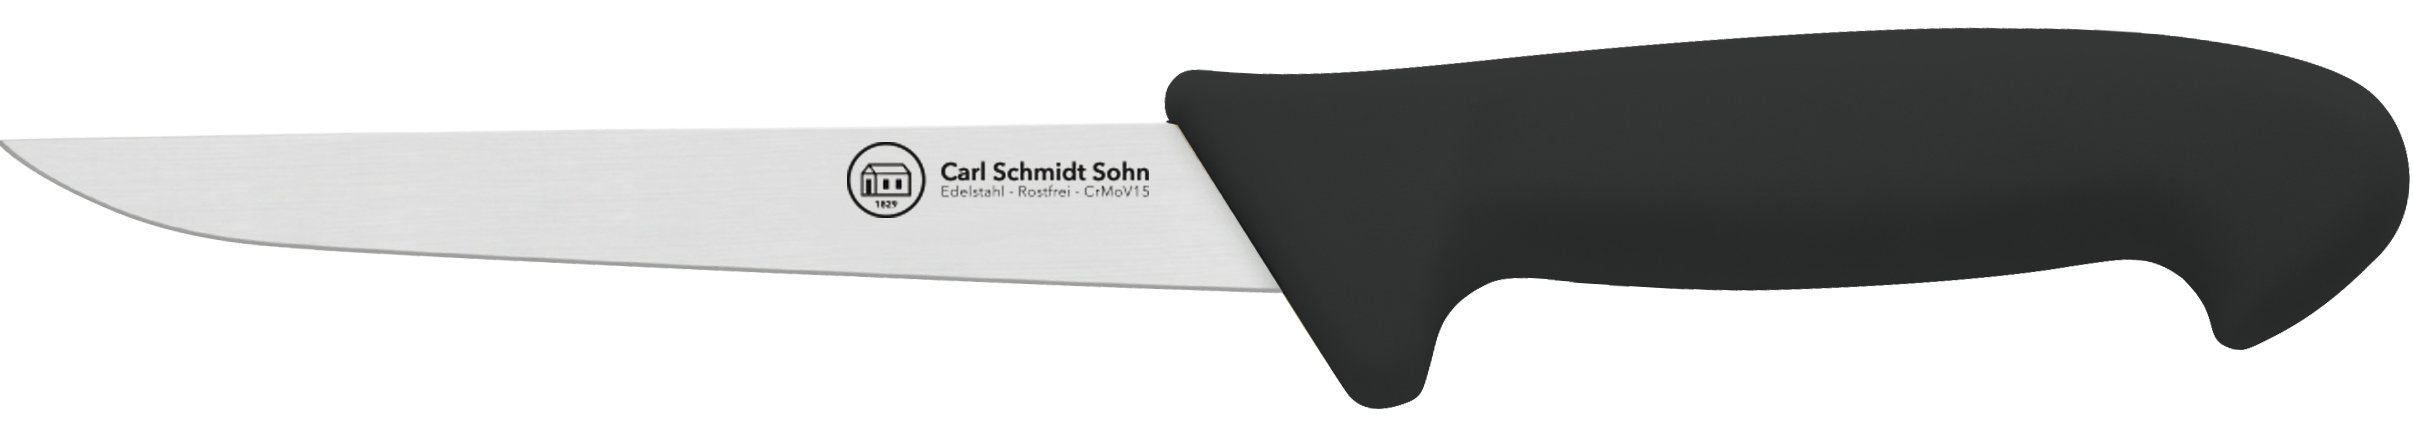 Koch Systeme by Carl Schmidt Sohn Florina Dual Purpose Kitchen Shears